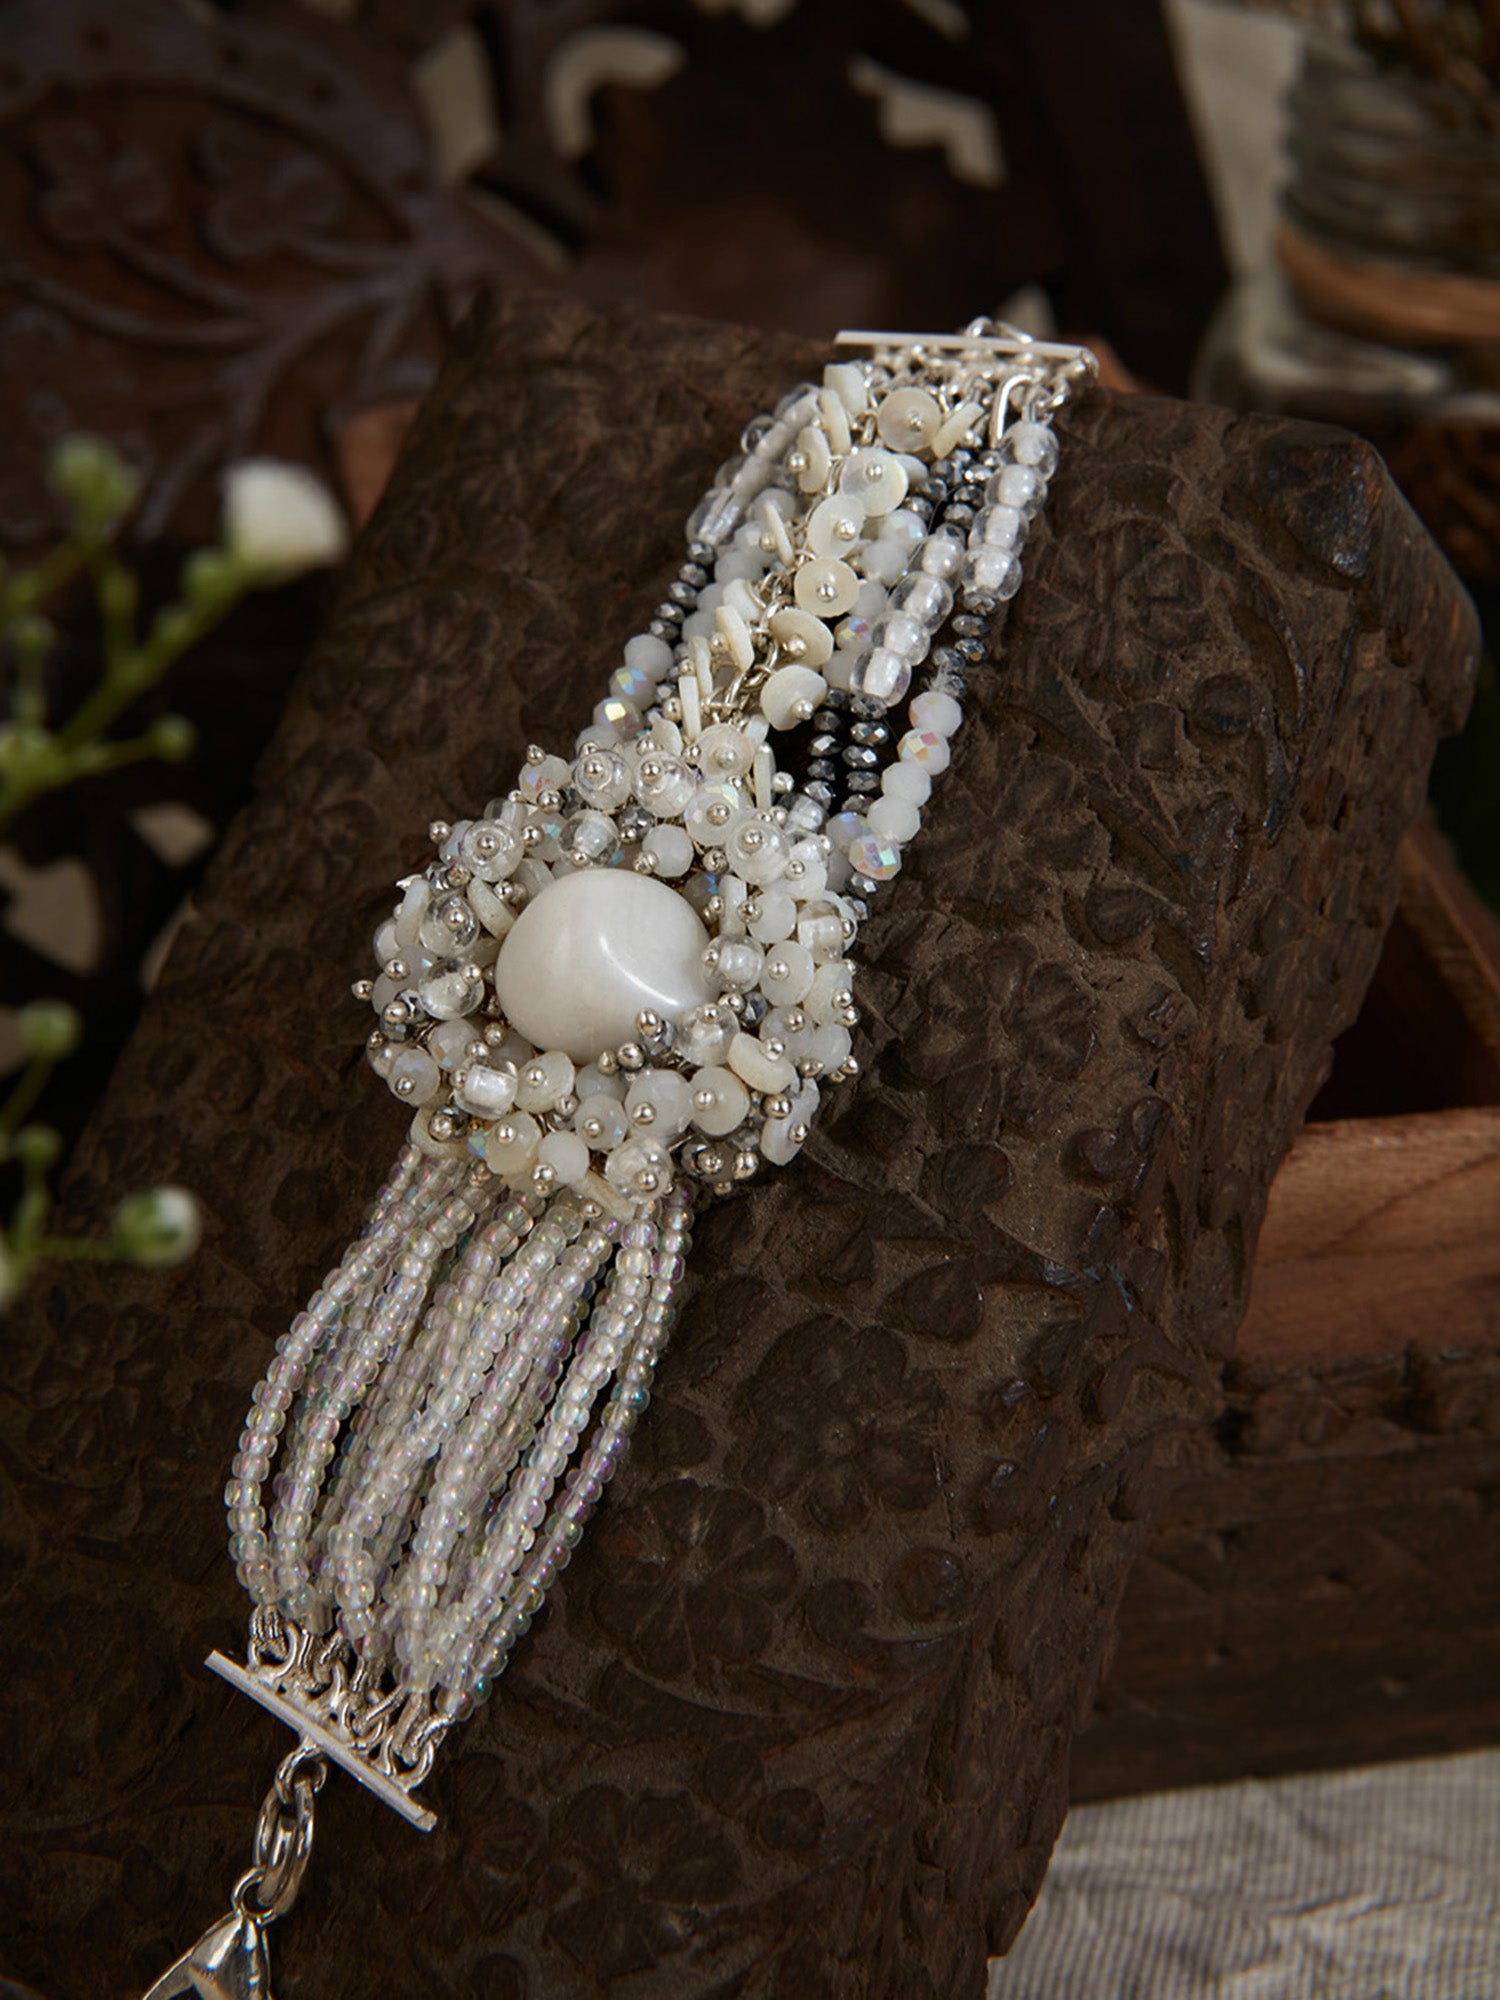 Amama,Classic Handmade Versatile Off-White Bracelet